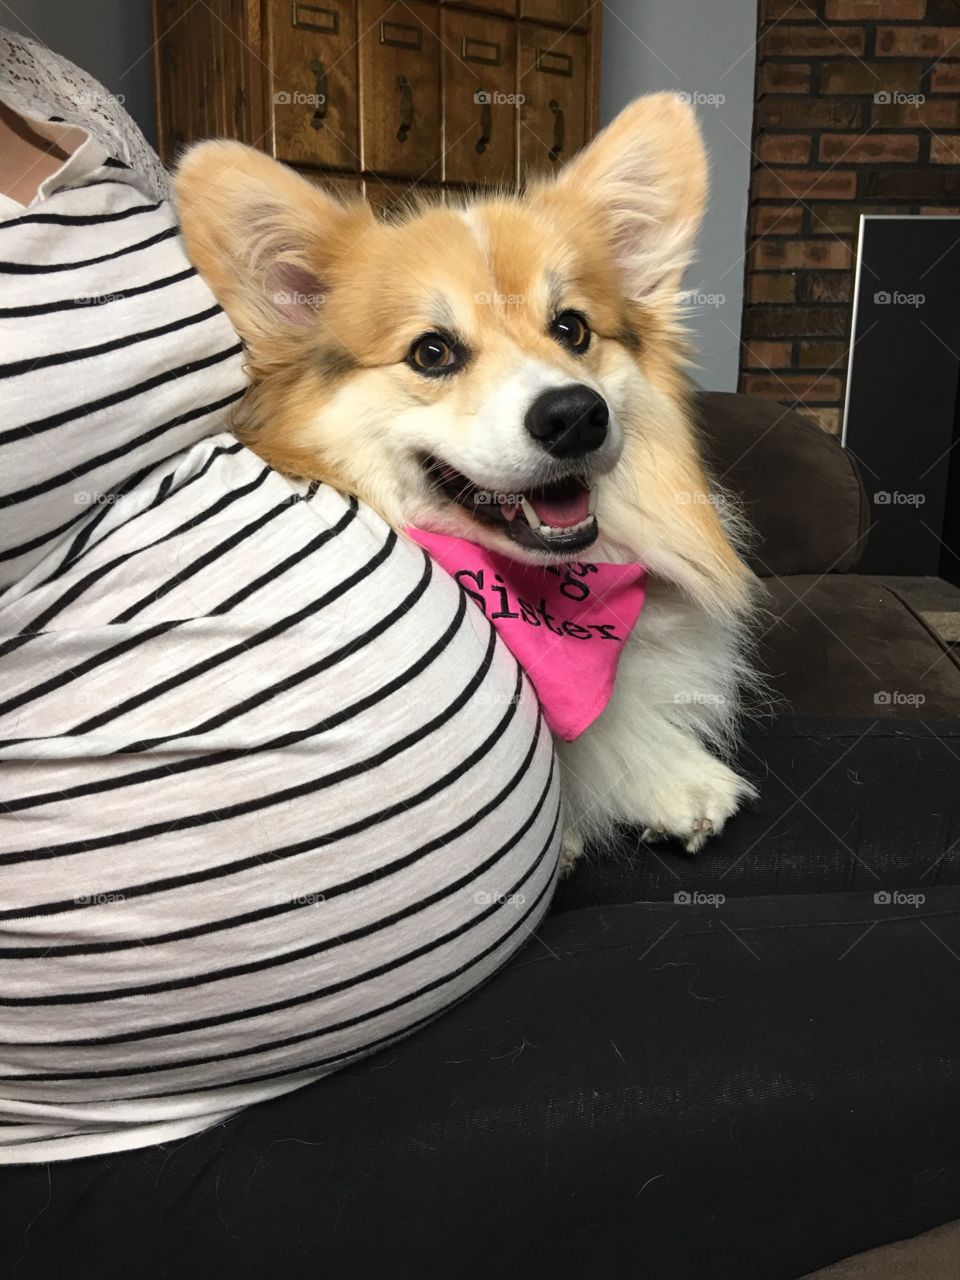 Maternity picture with corgi dog